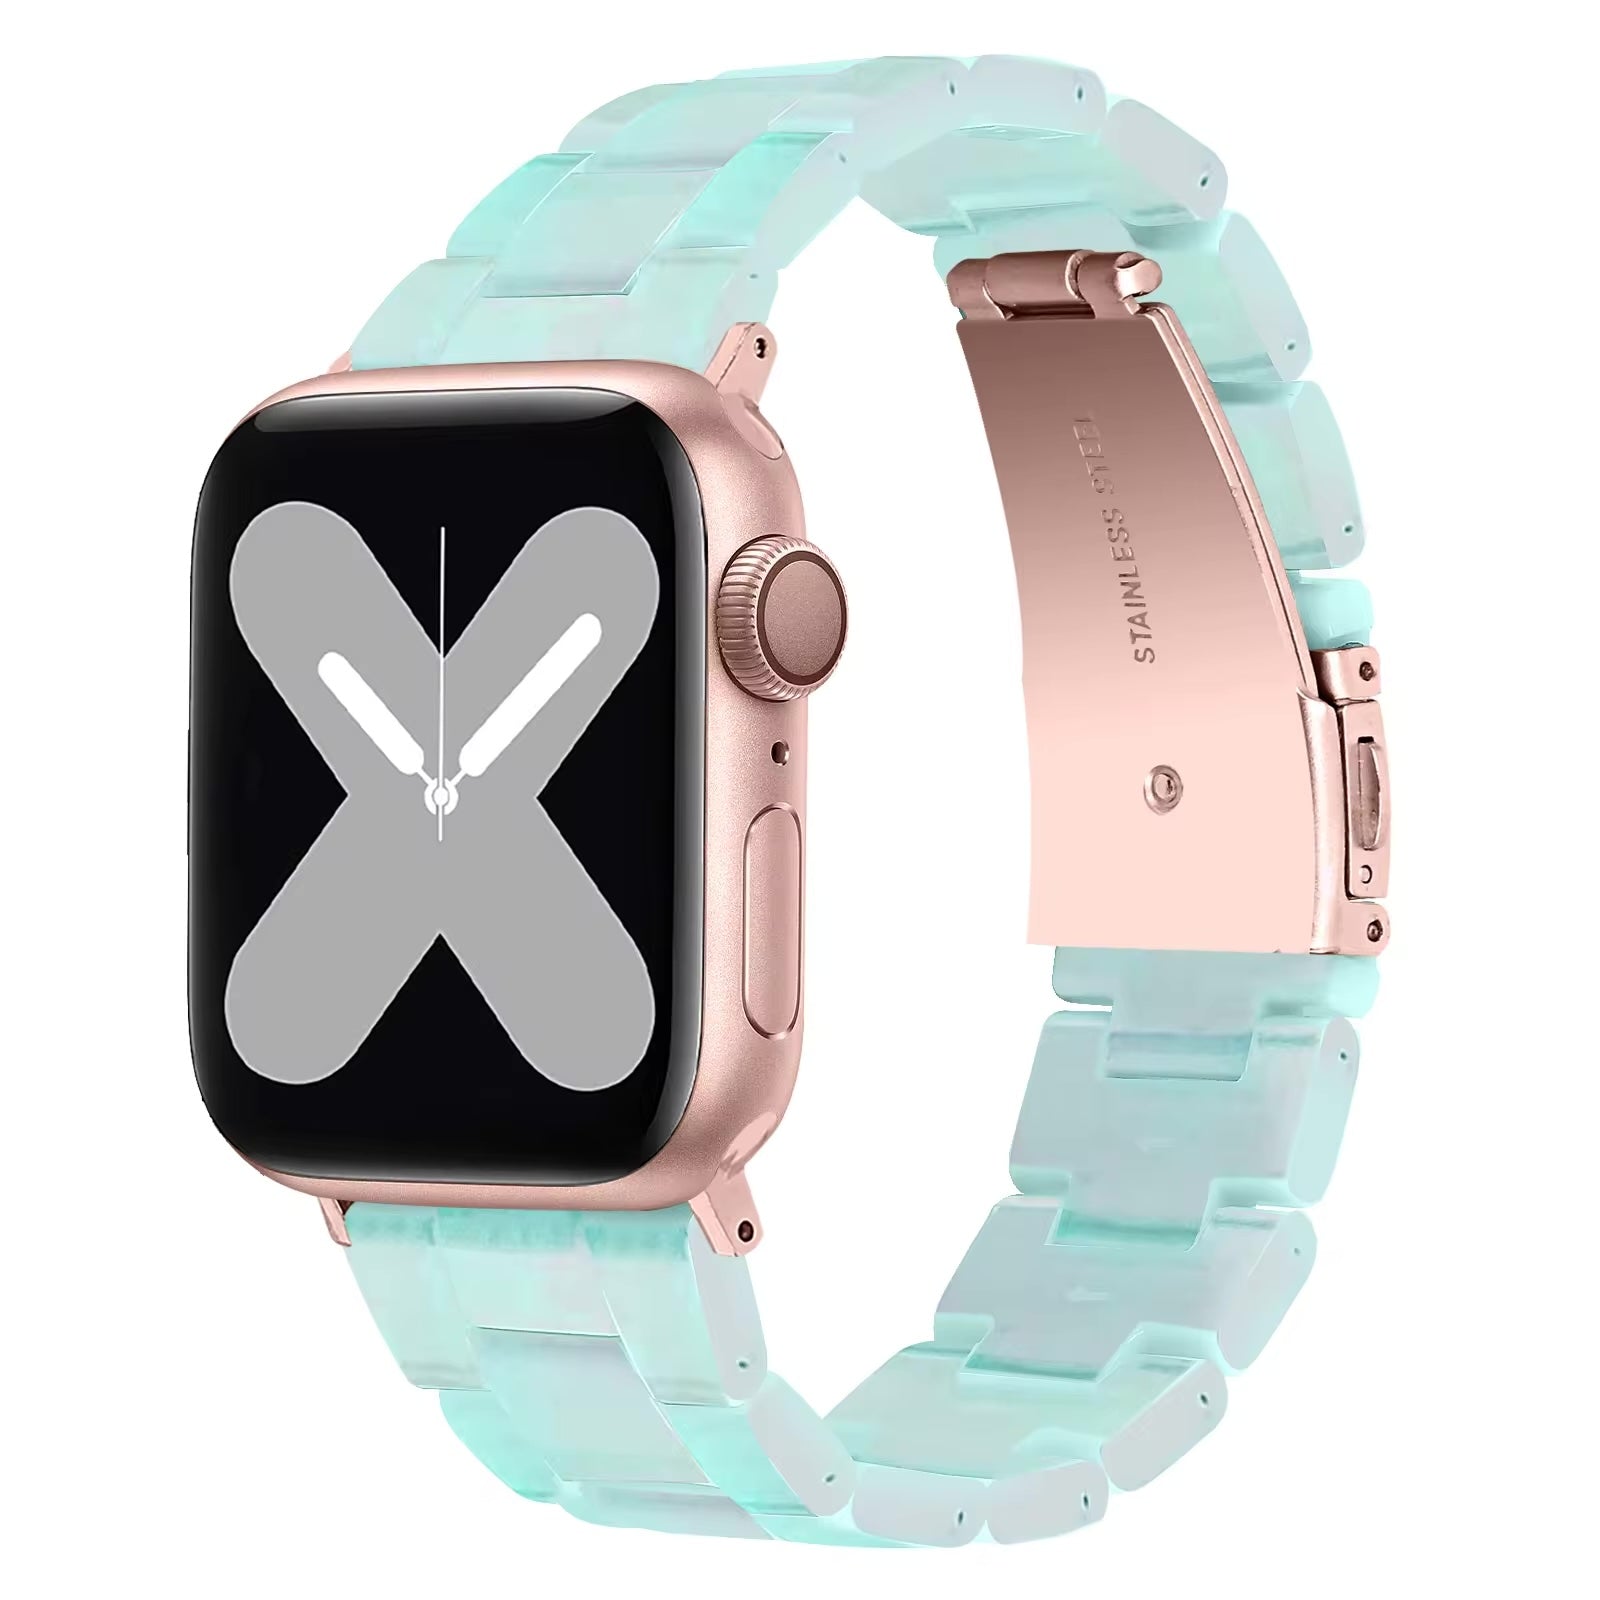 SpectraLux Resin Series for Apple Watch - Wrist Drip